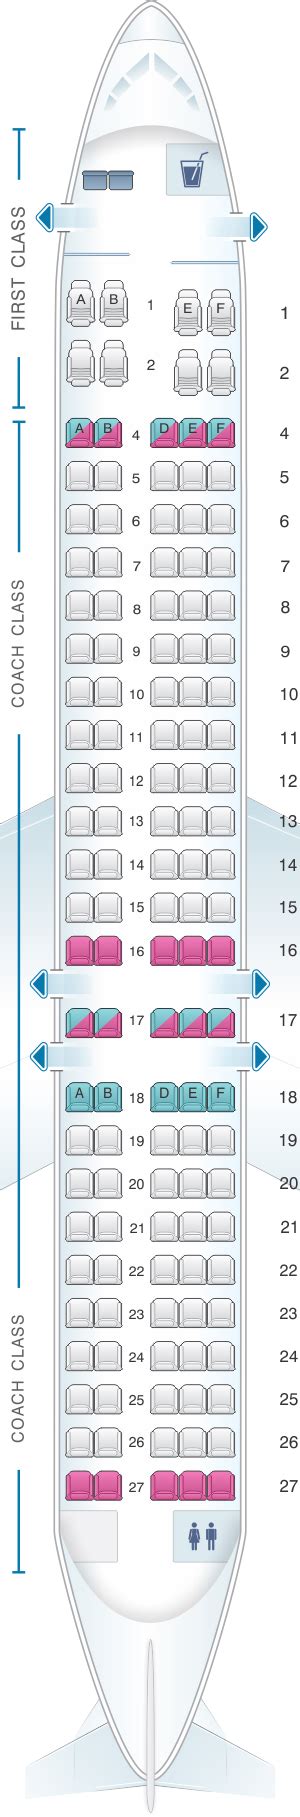 Seating Chart Hawaiian Airlines